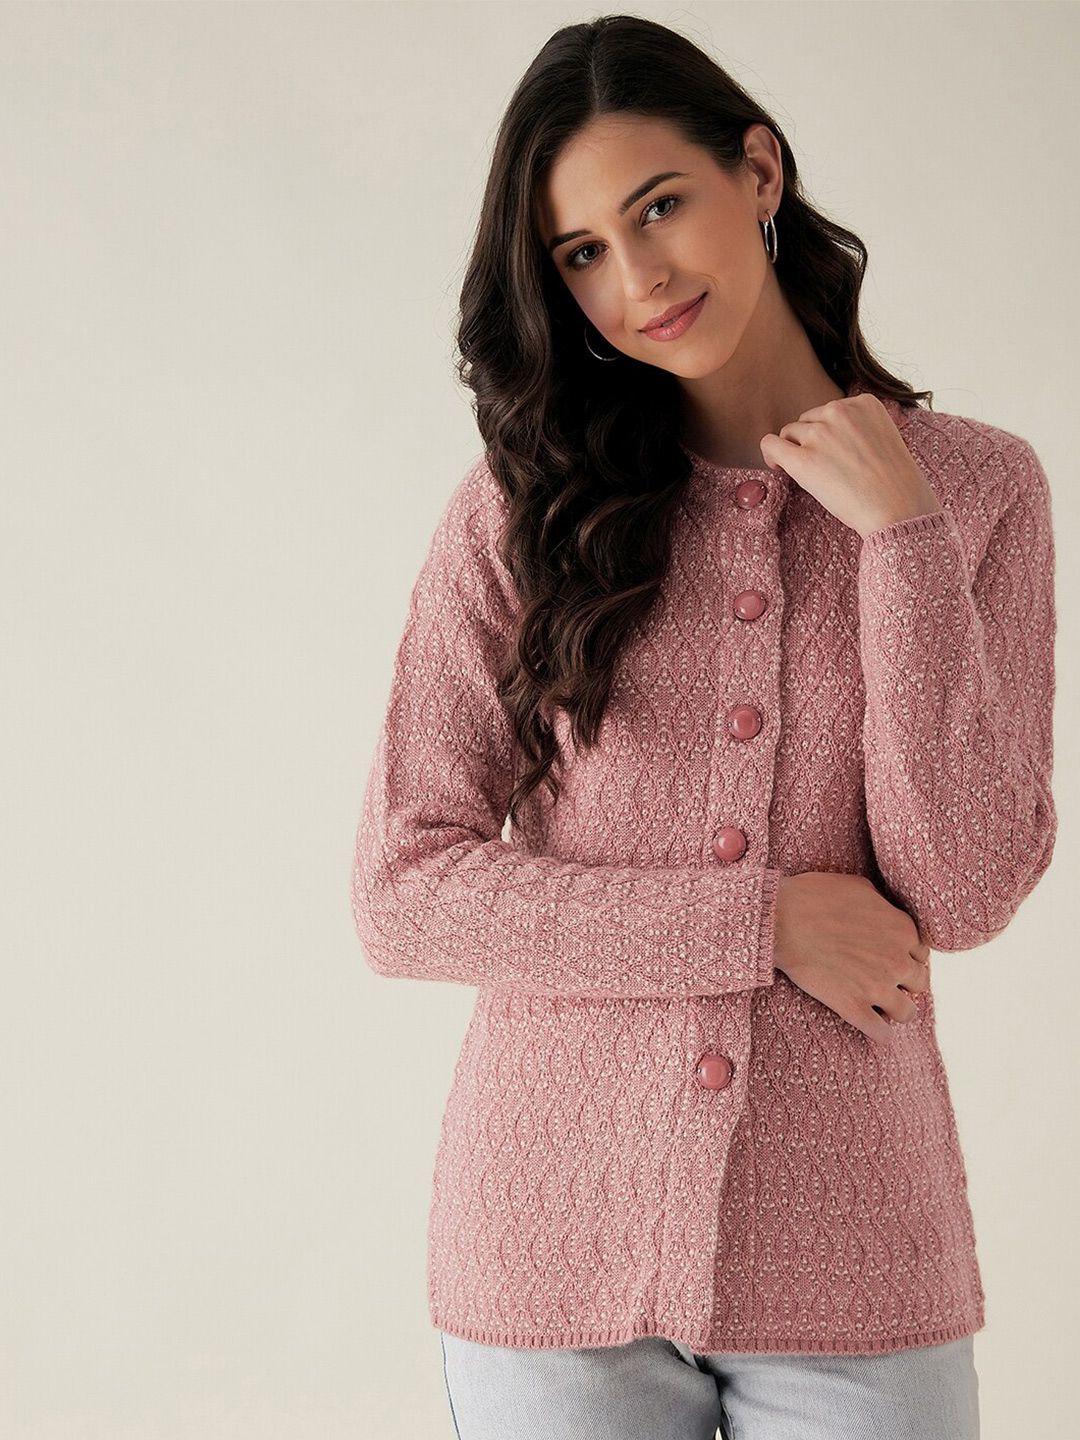 rivza women pink cable knit sweater vest